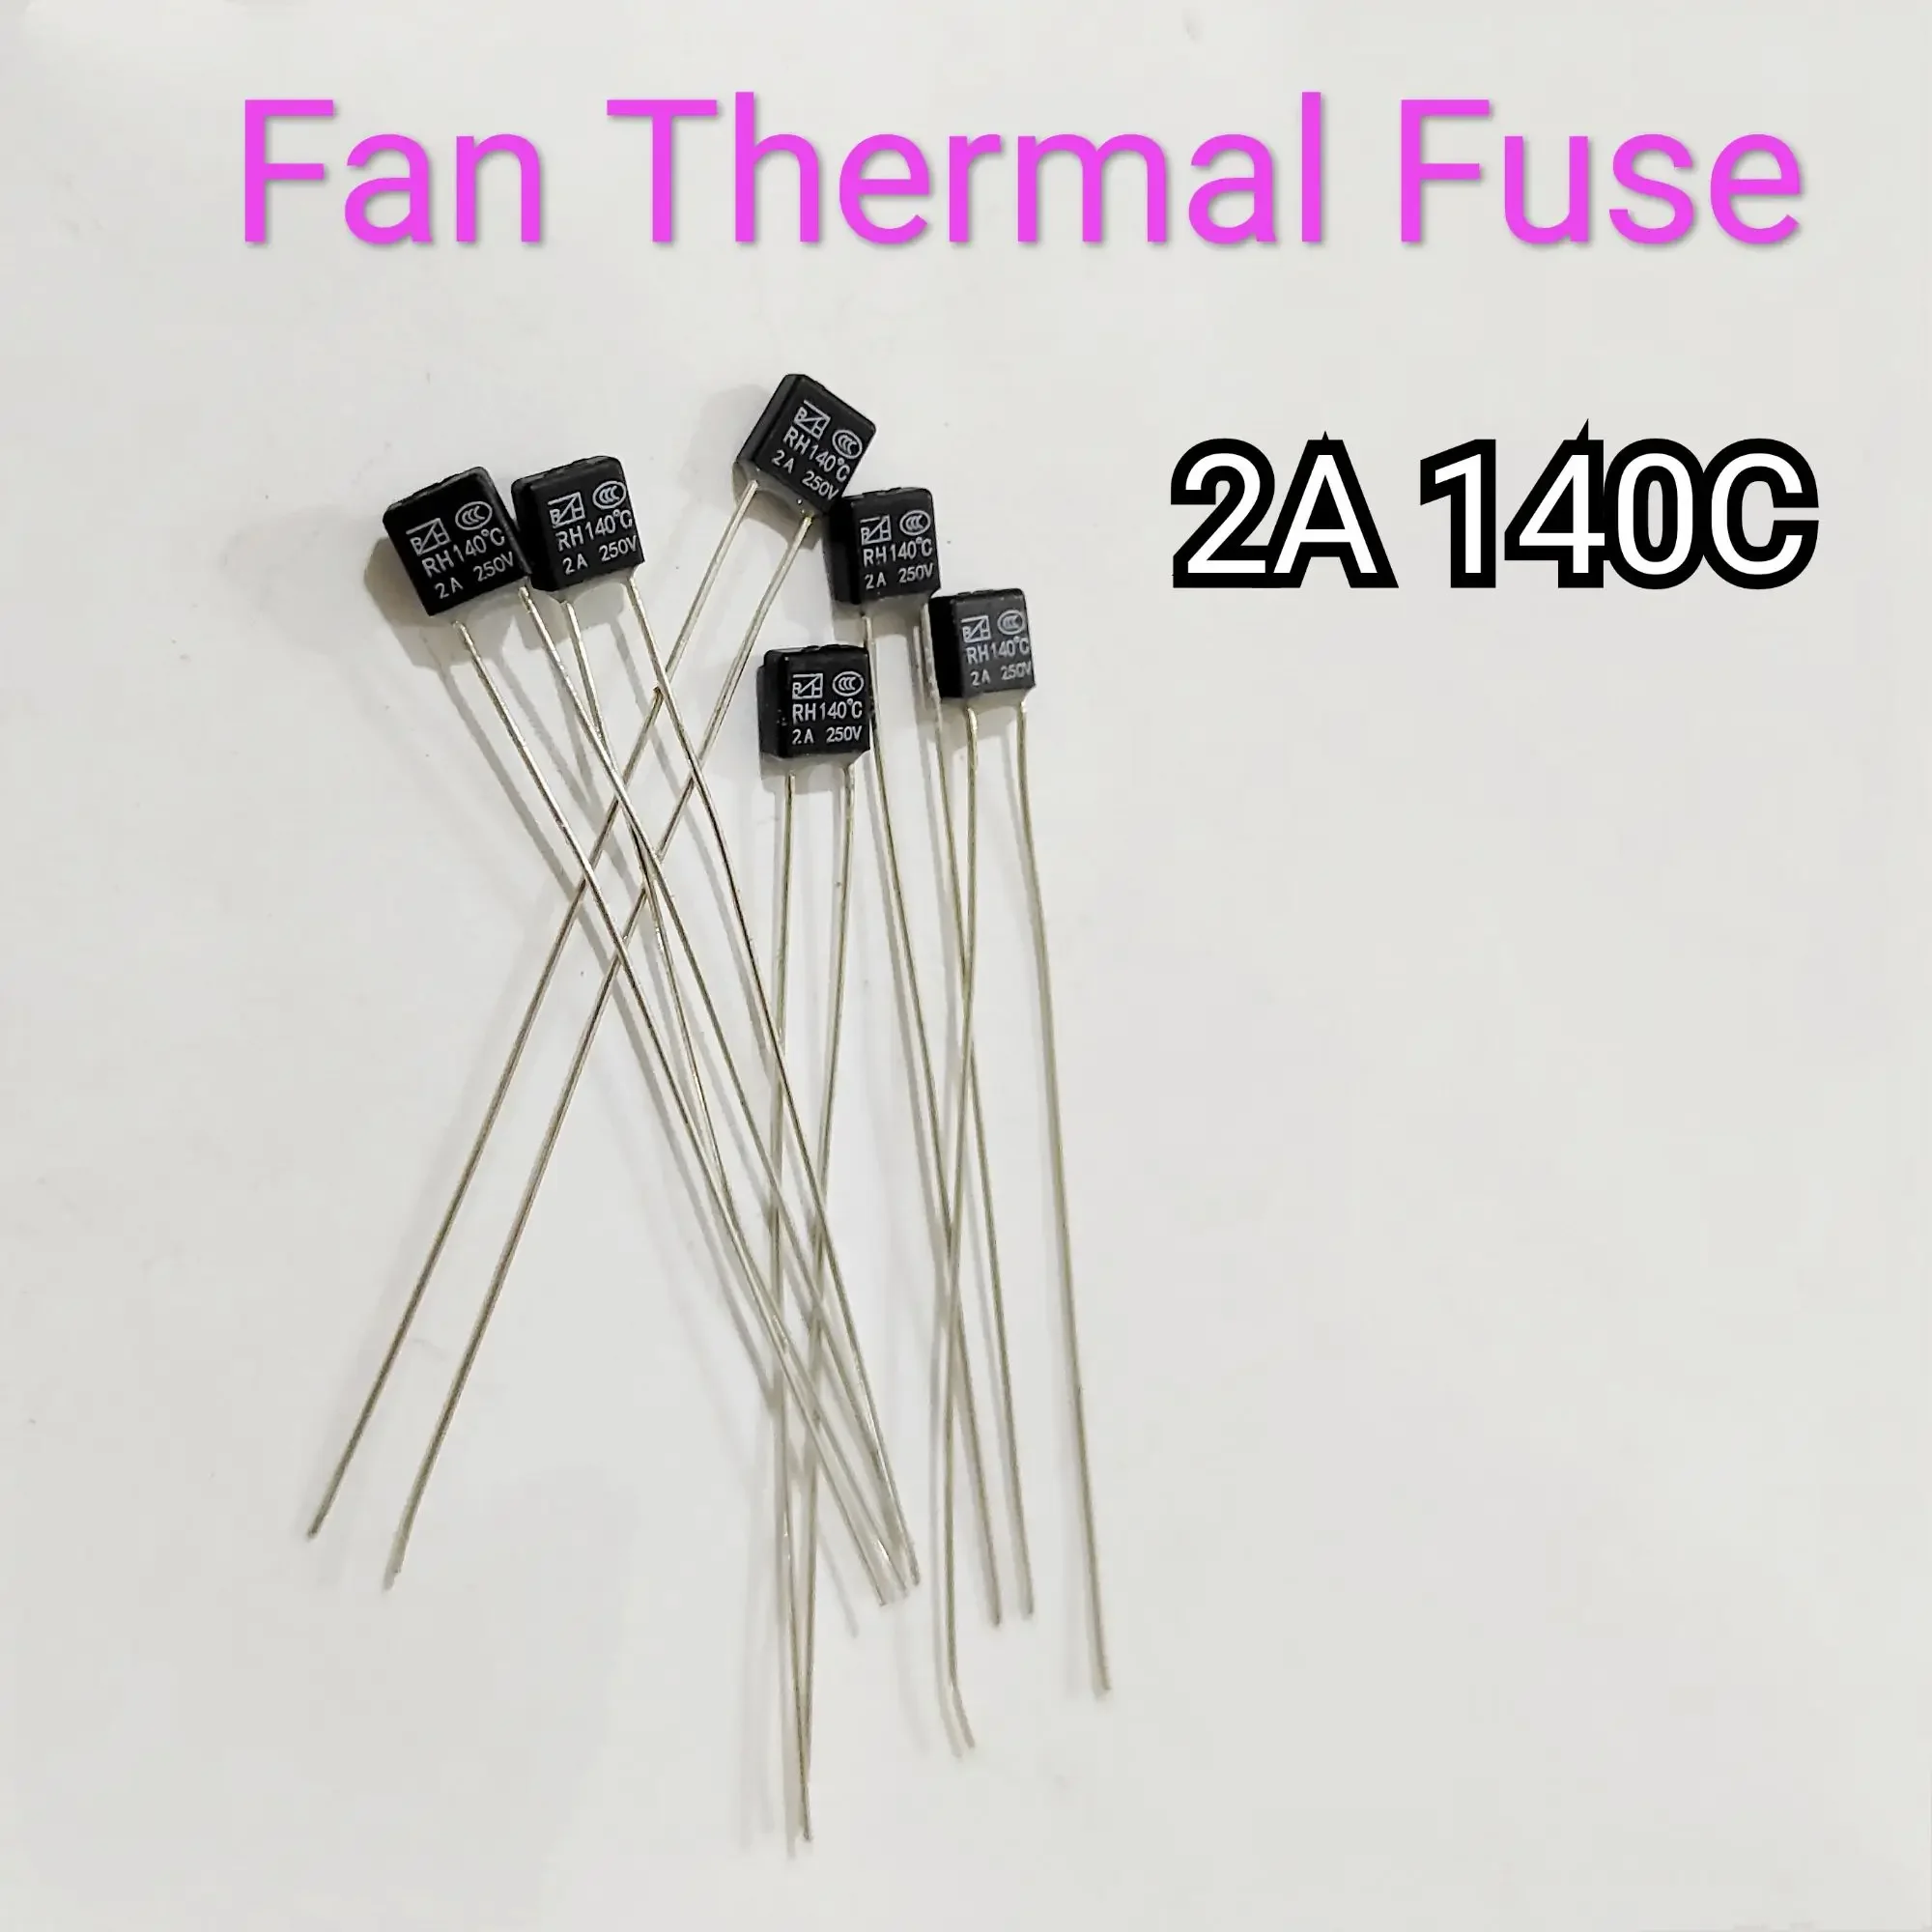 1 biji 2A 140C 250V Fan Thermal Fuse fius kipas 2a 140c